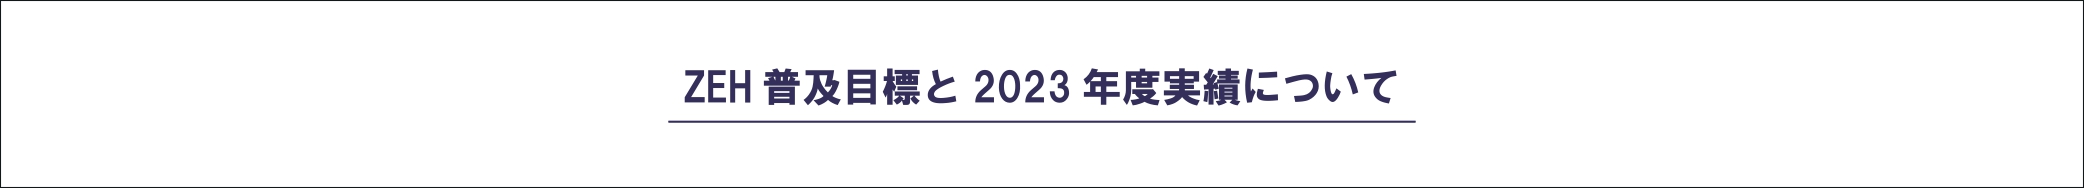 ZEH普及目標と2023年度実績について